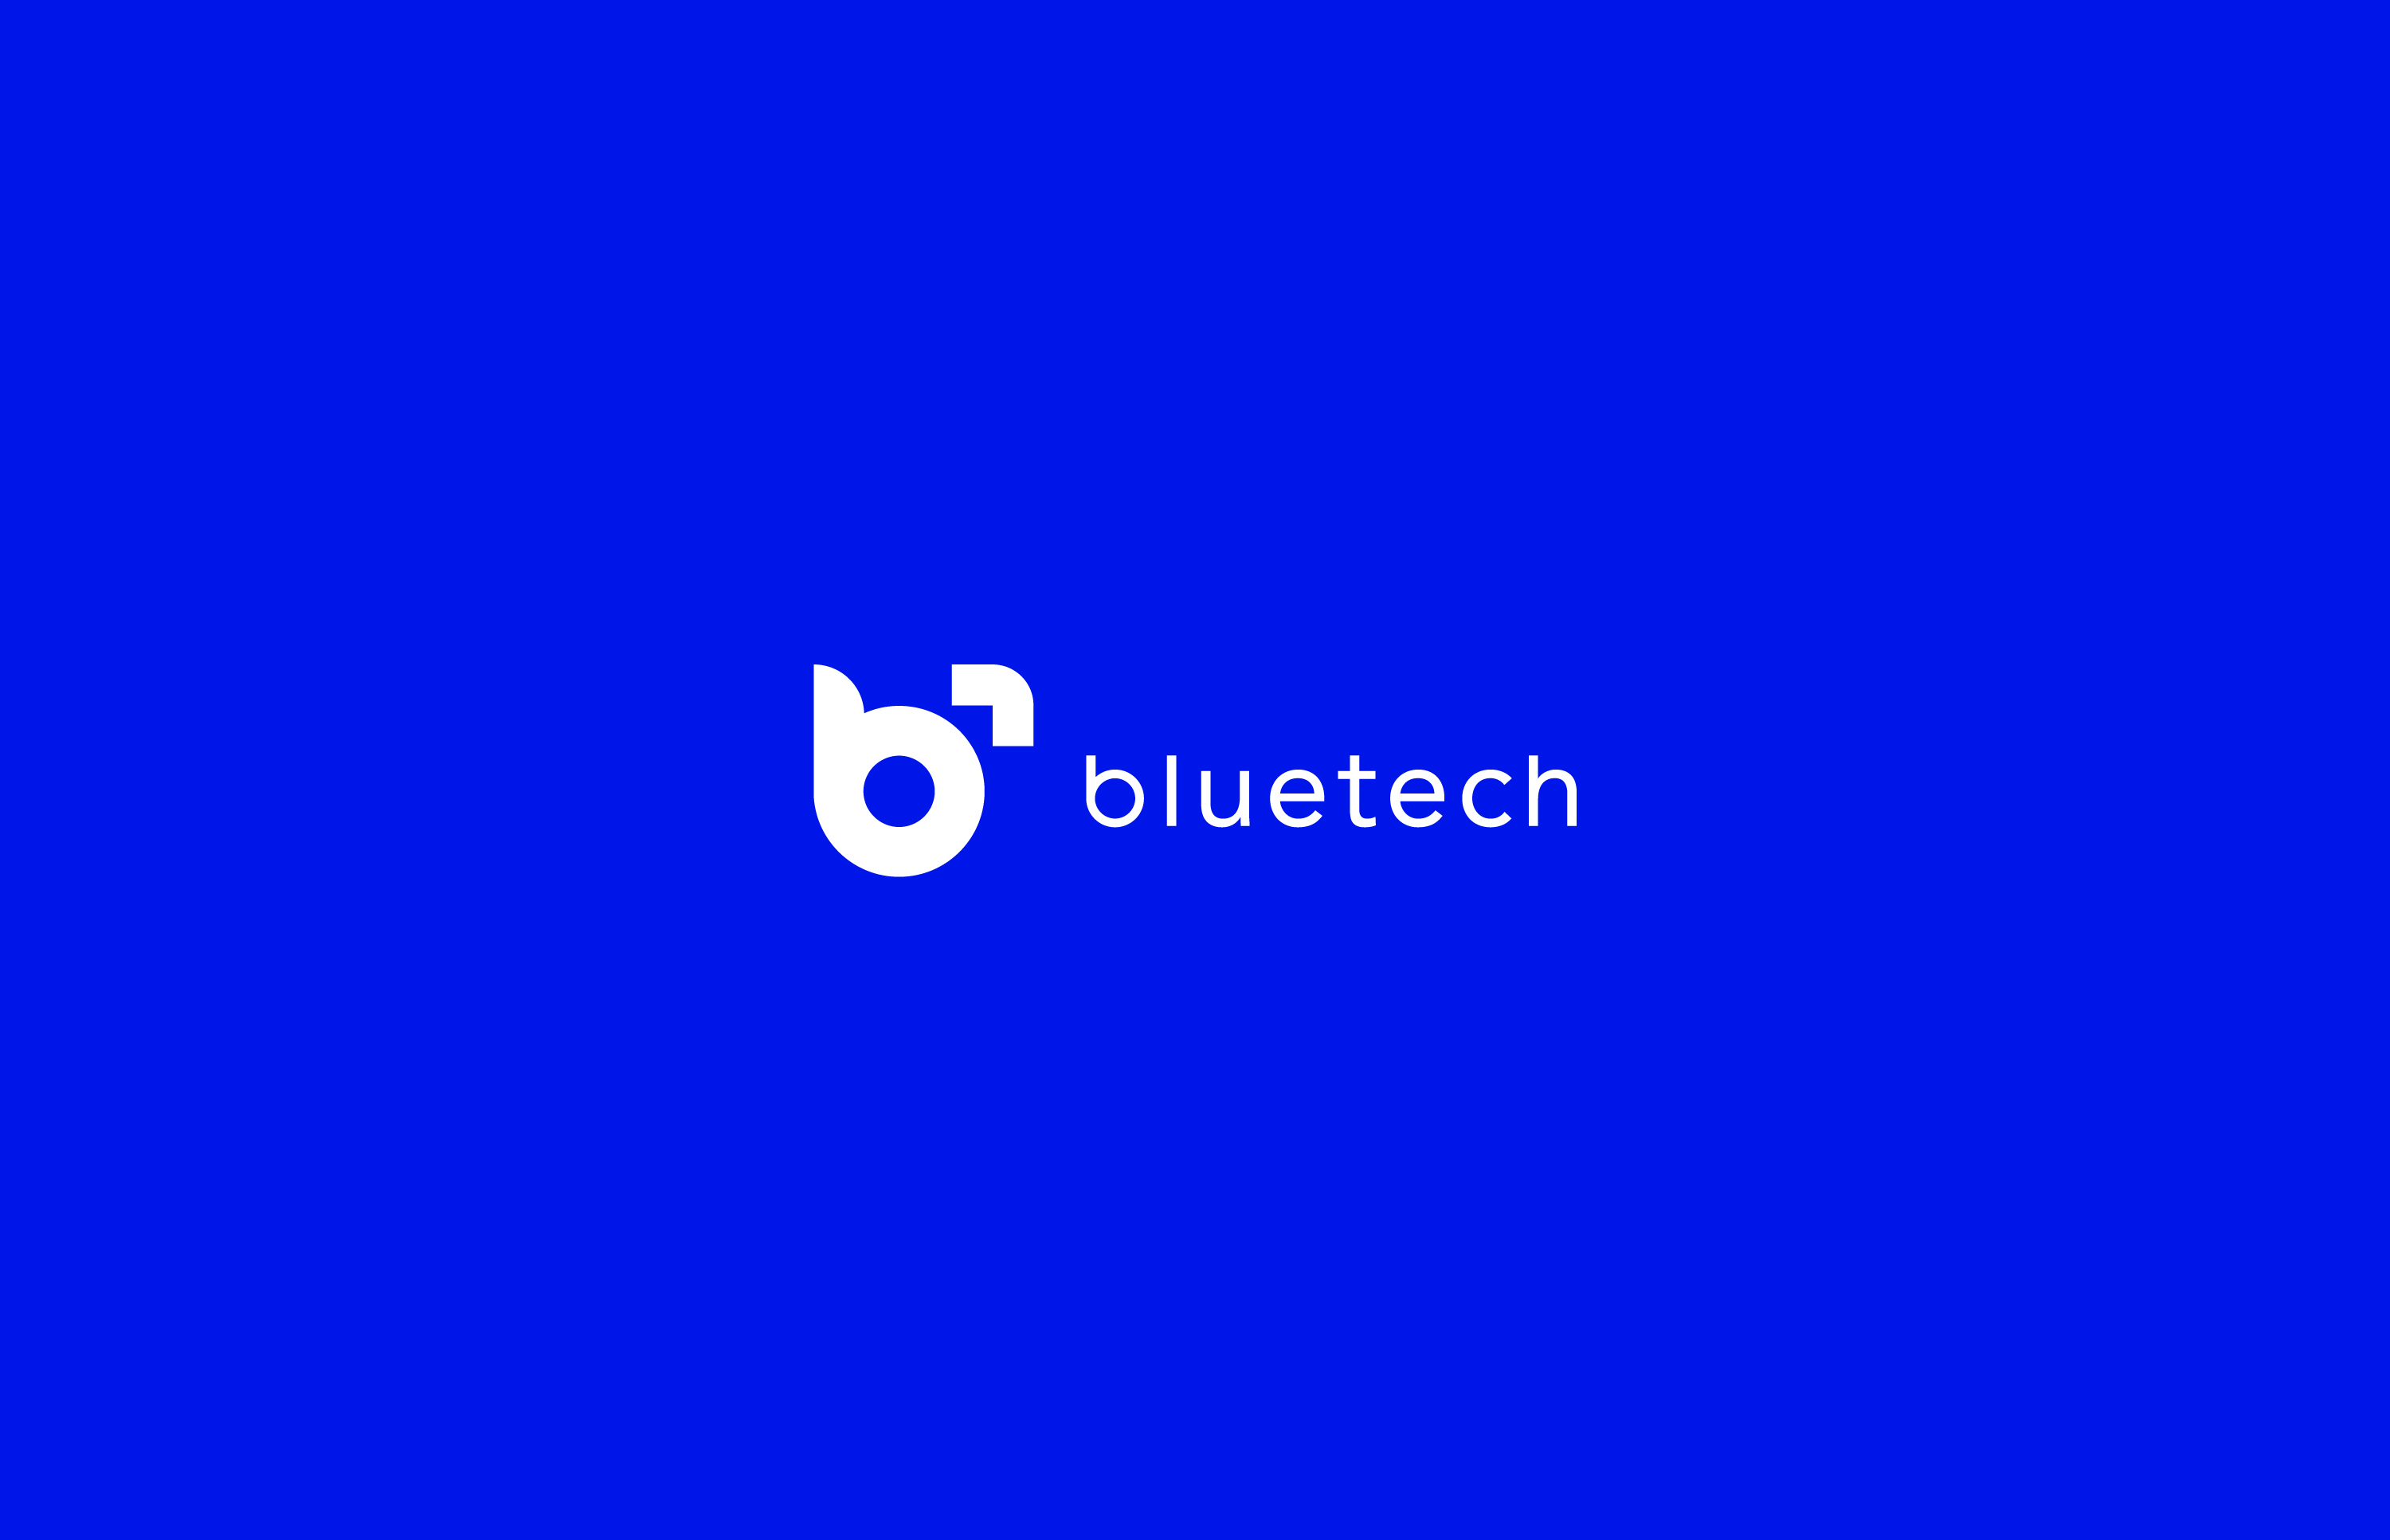 bluetech technology